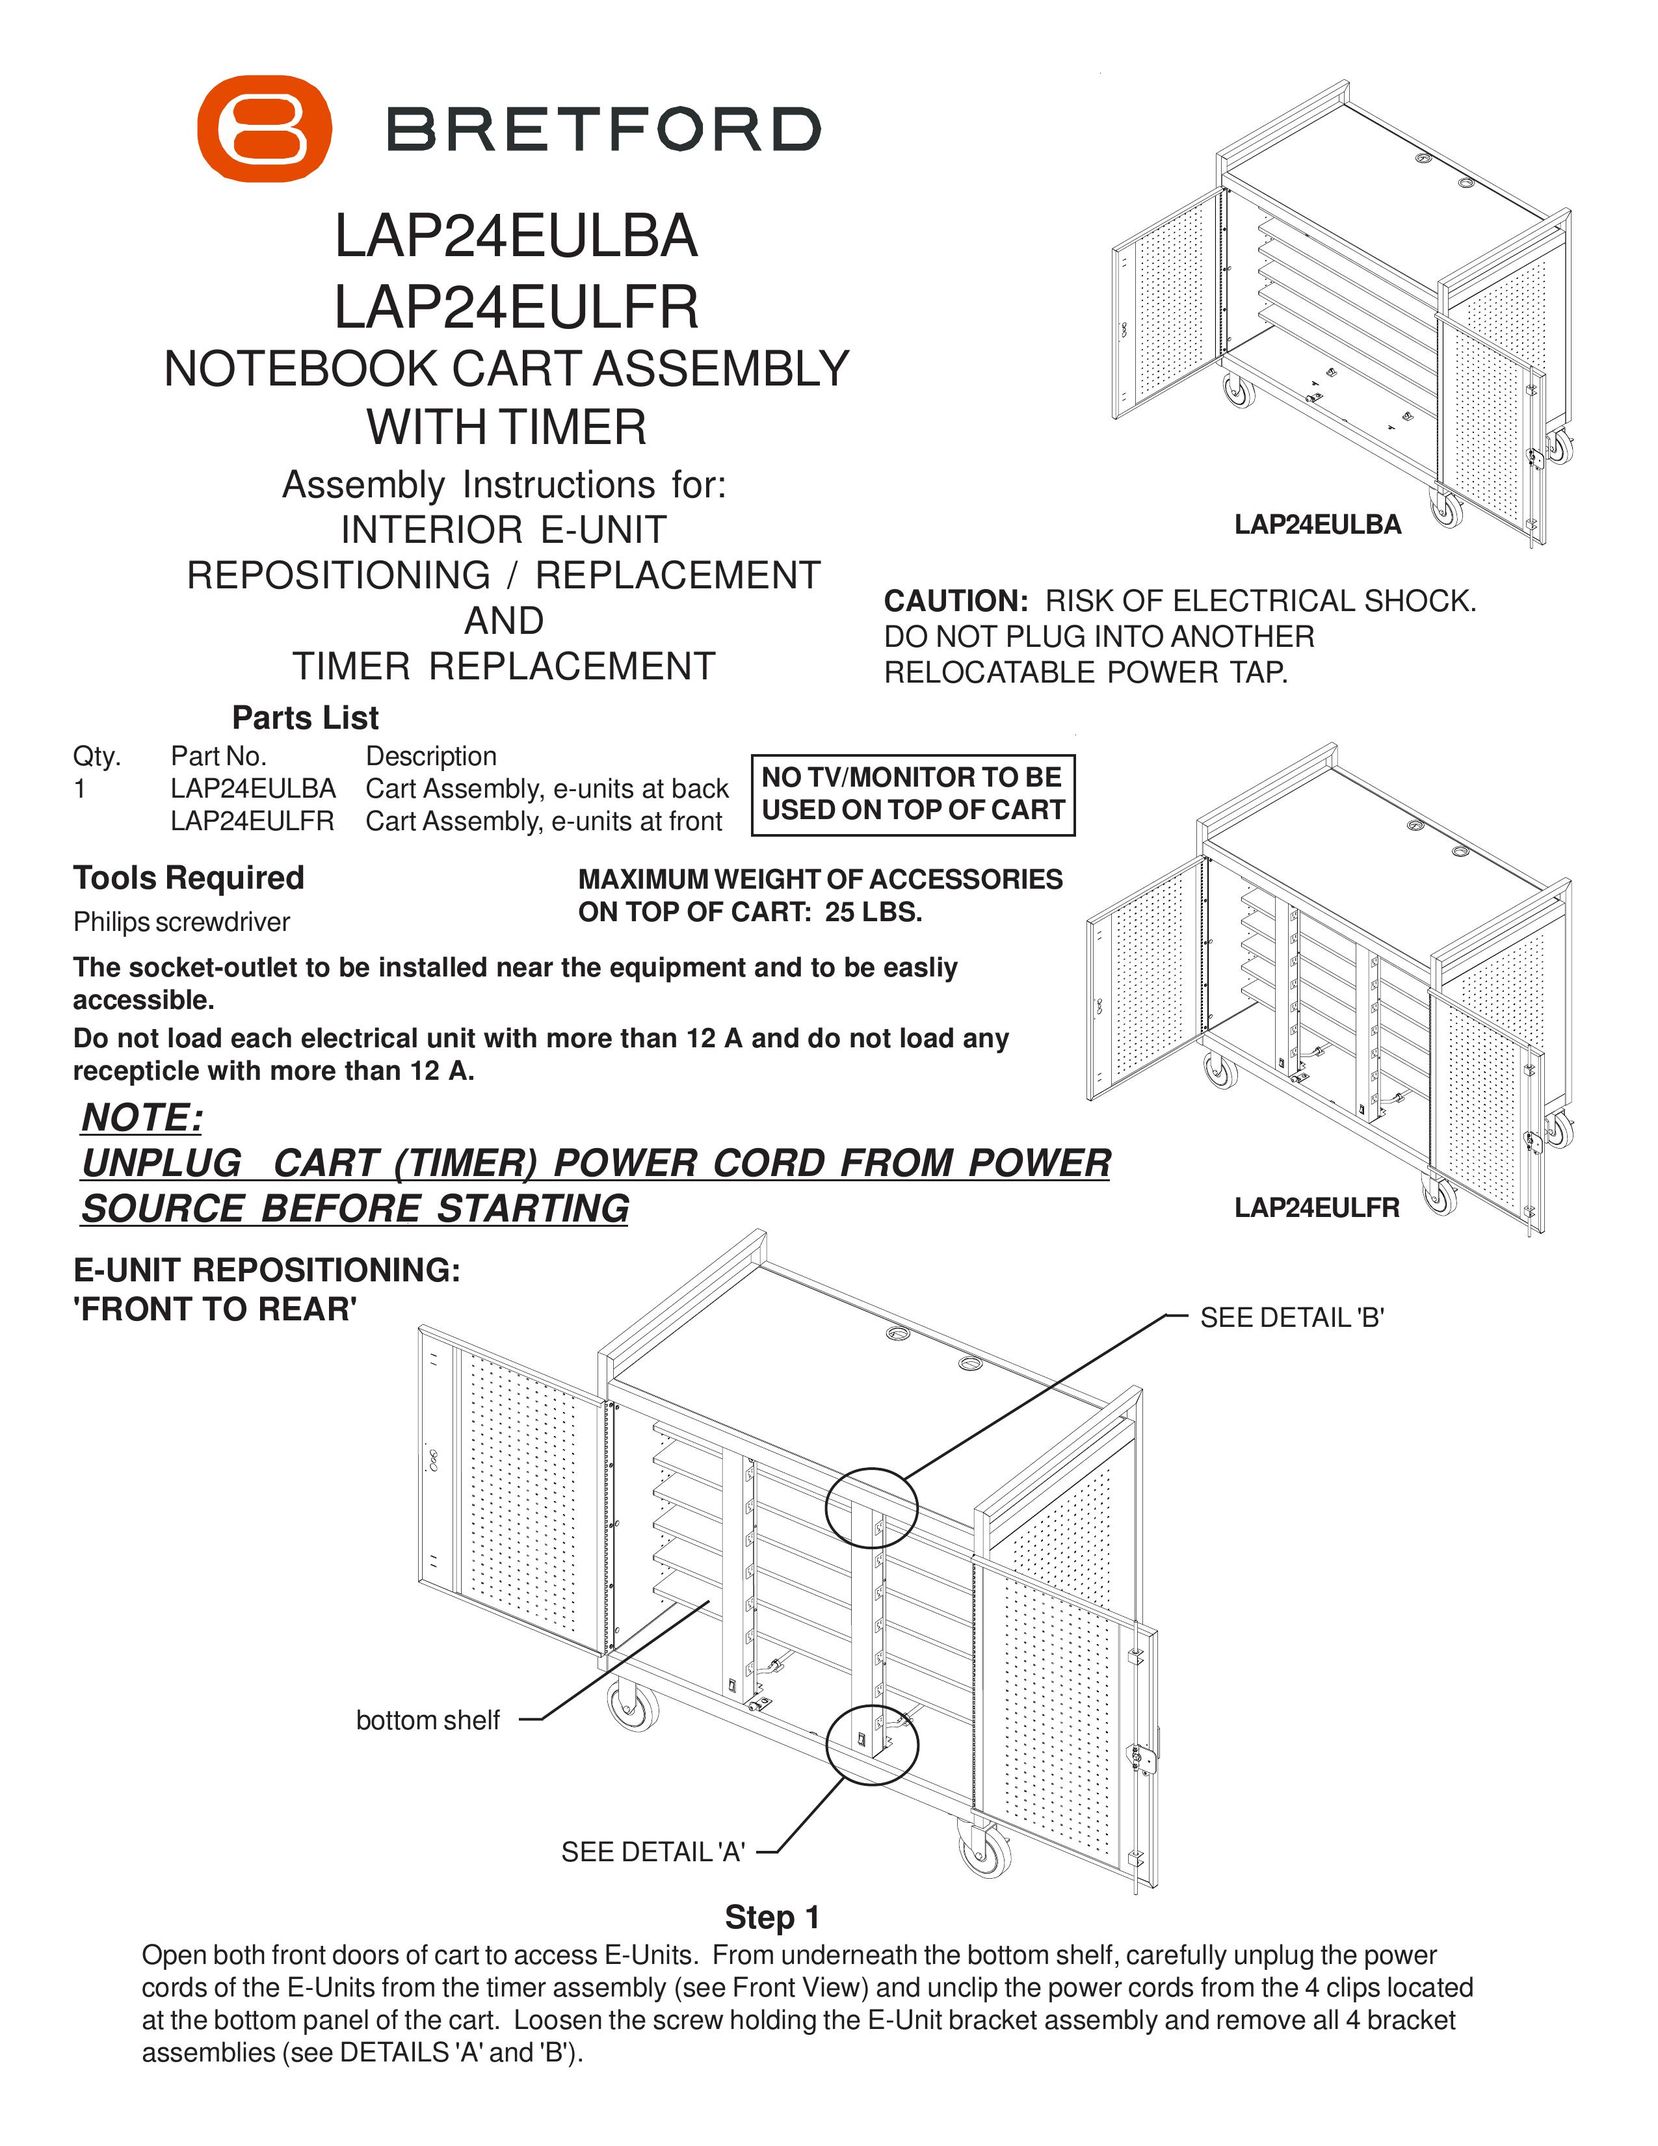 Bretford LAP24EULBA Computer Accessories User Manual